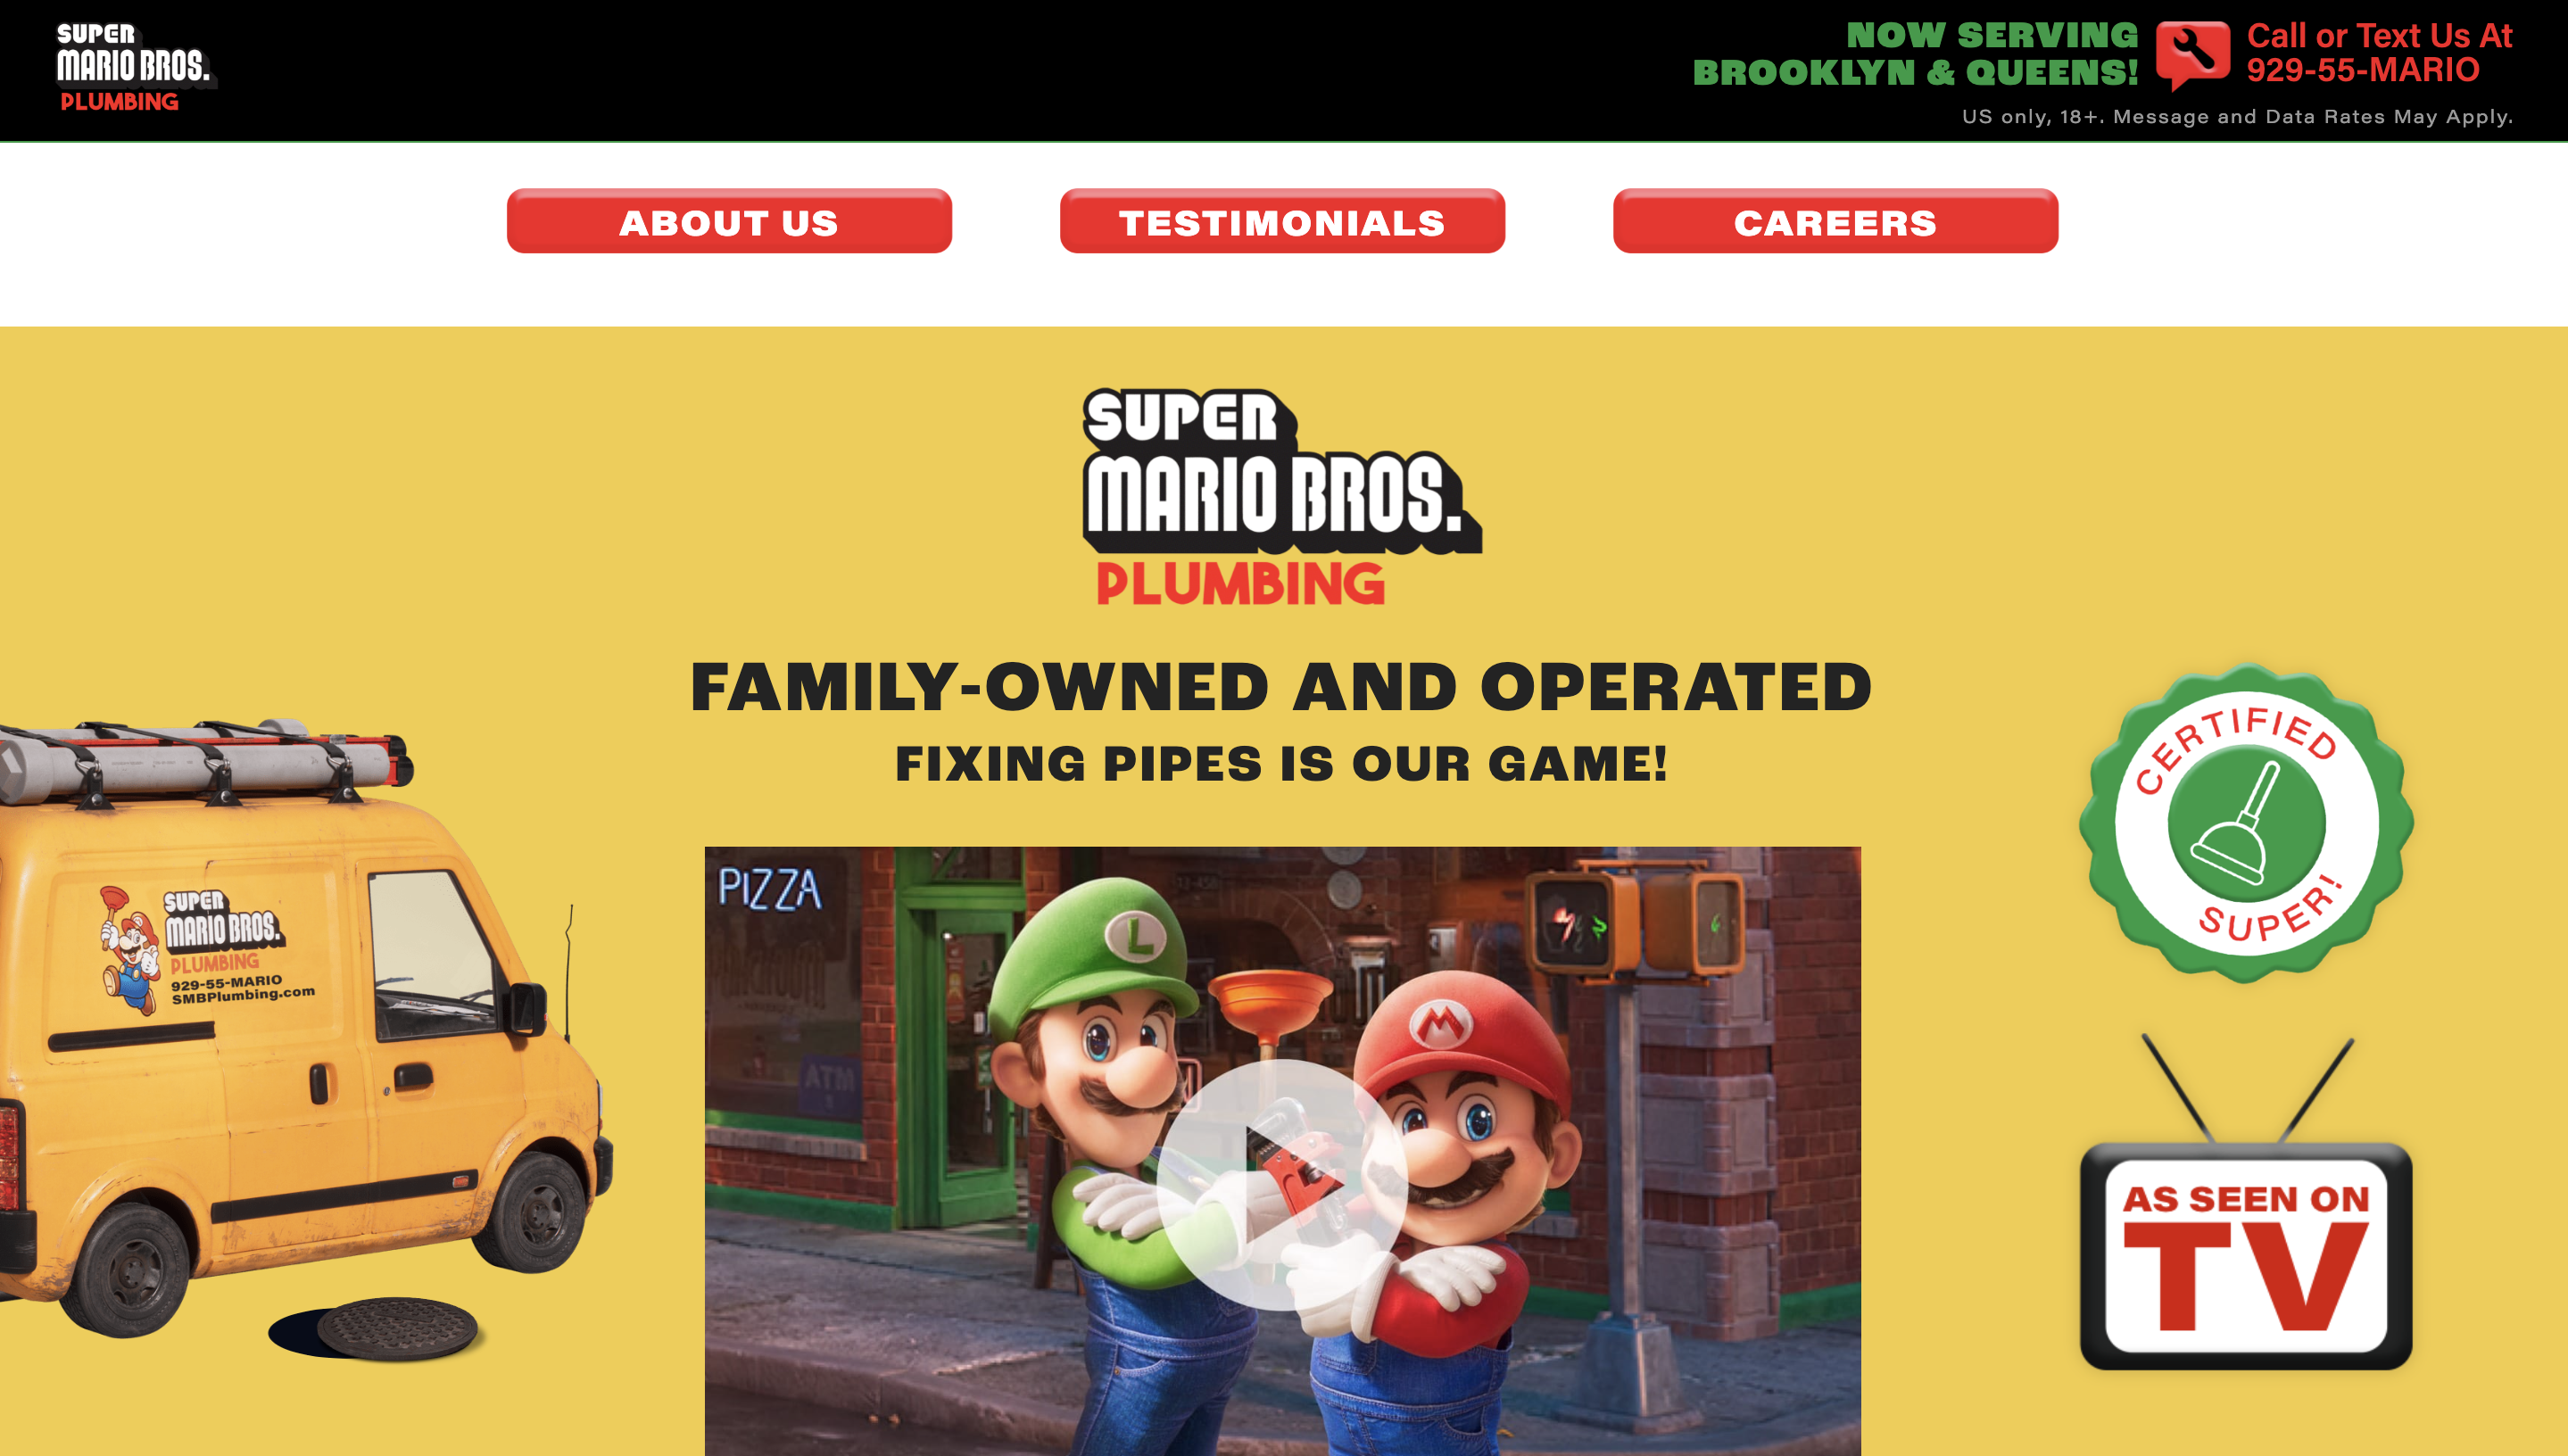 Audiense blog - mock website promoting Super Mario Bros